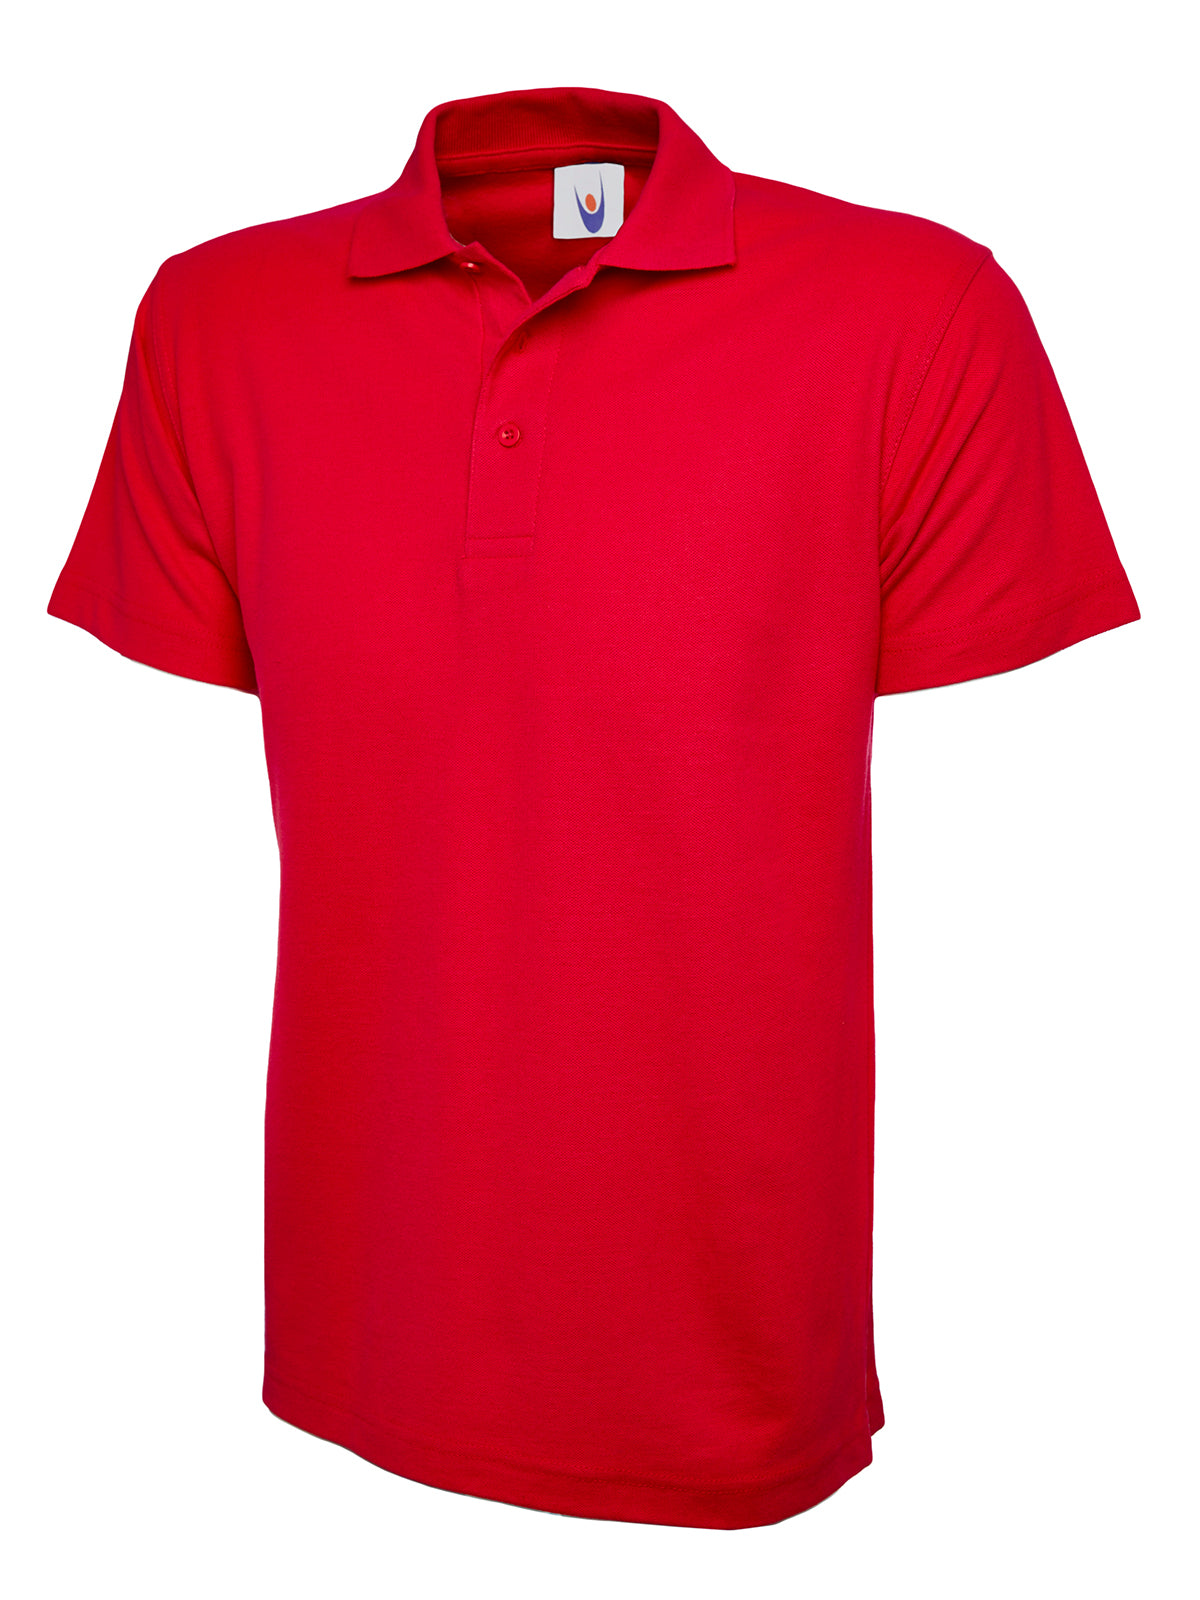 Uneek Olympic Poloshirt UC124 - Red